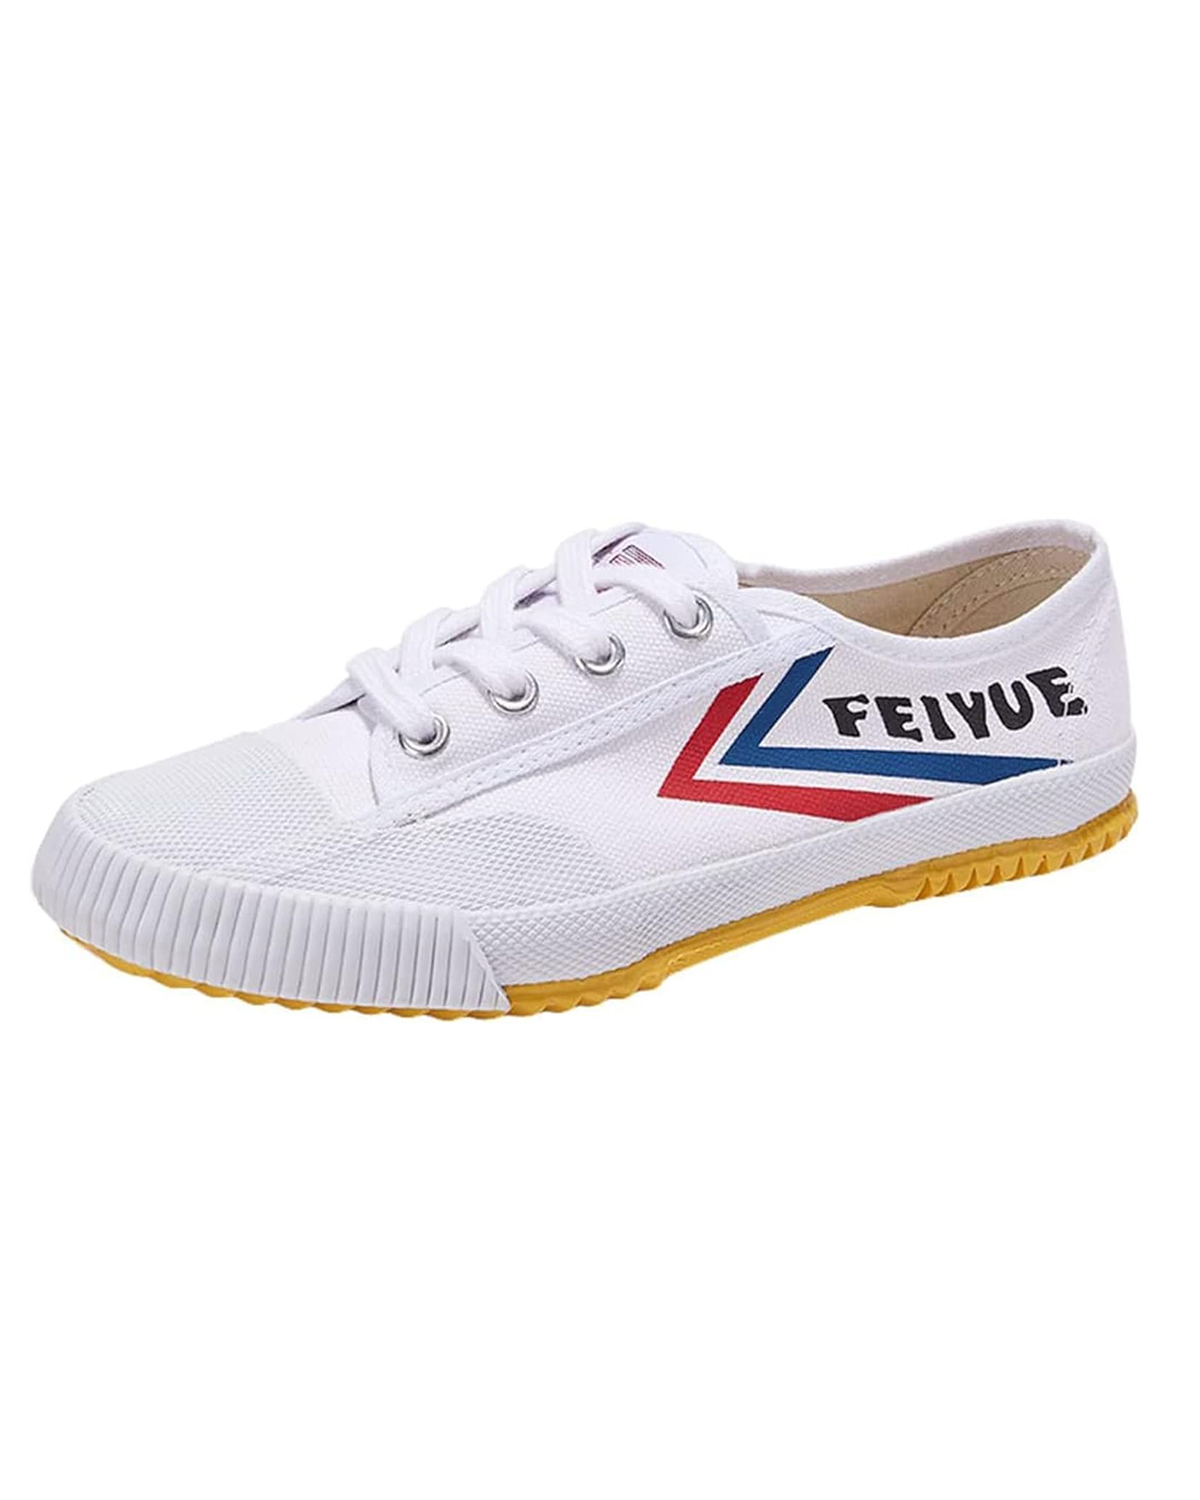 Feiyue Canvas Shoes white